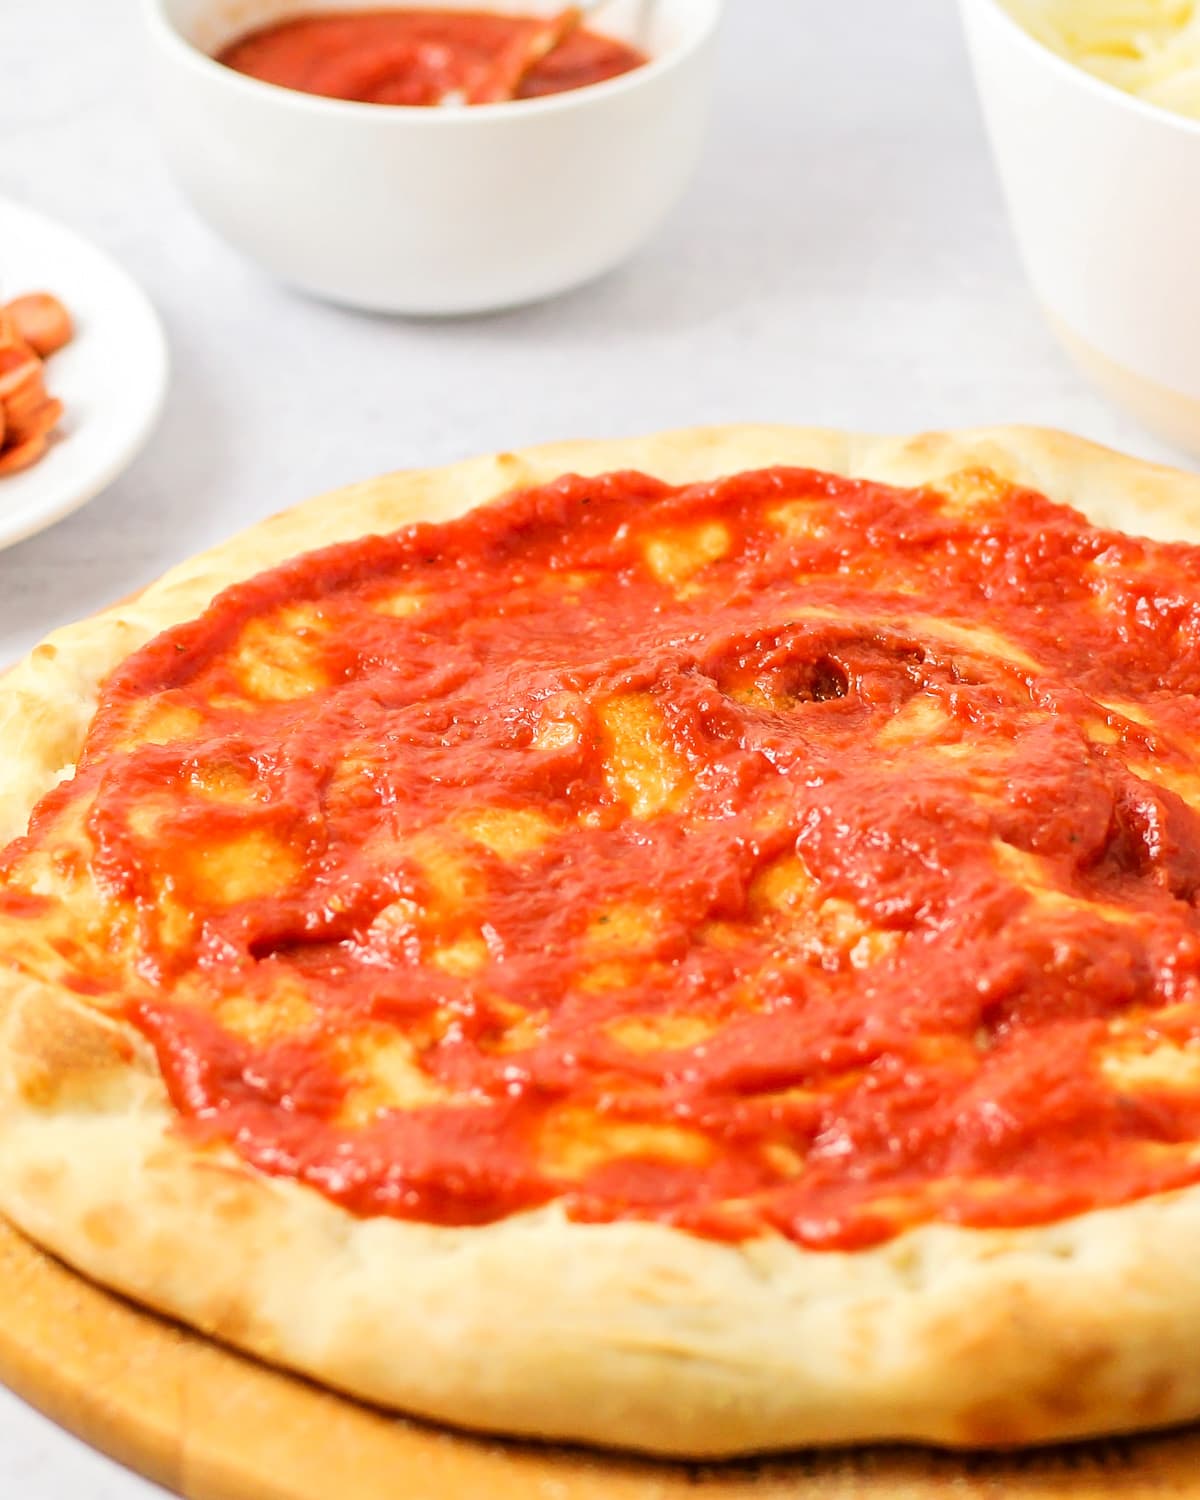 Homemade pizza sauce recipe spread over pizza crust close up image.